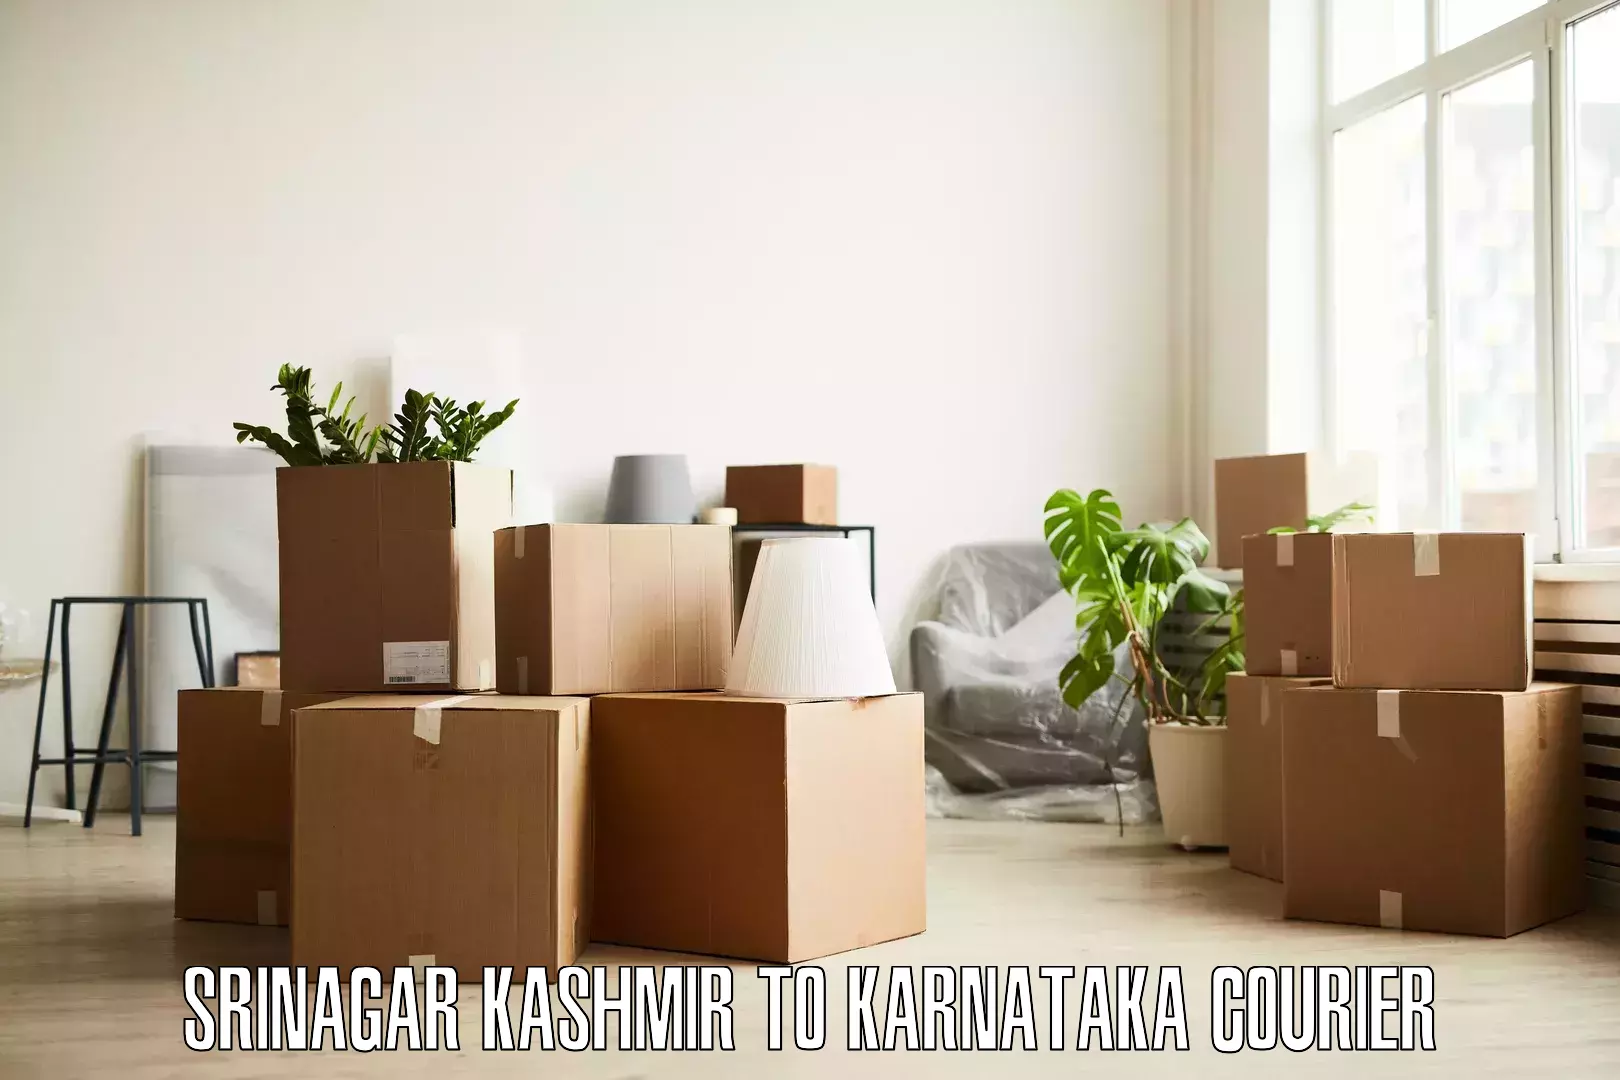 Quality moving and storage Srinagar Kashmir to Gurmatkal